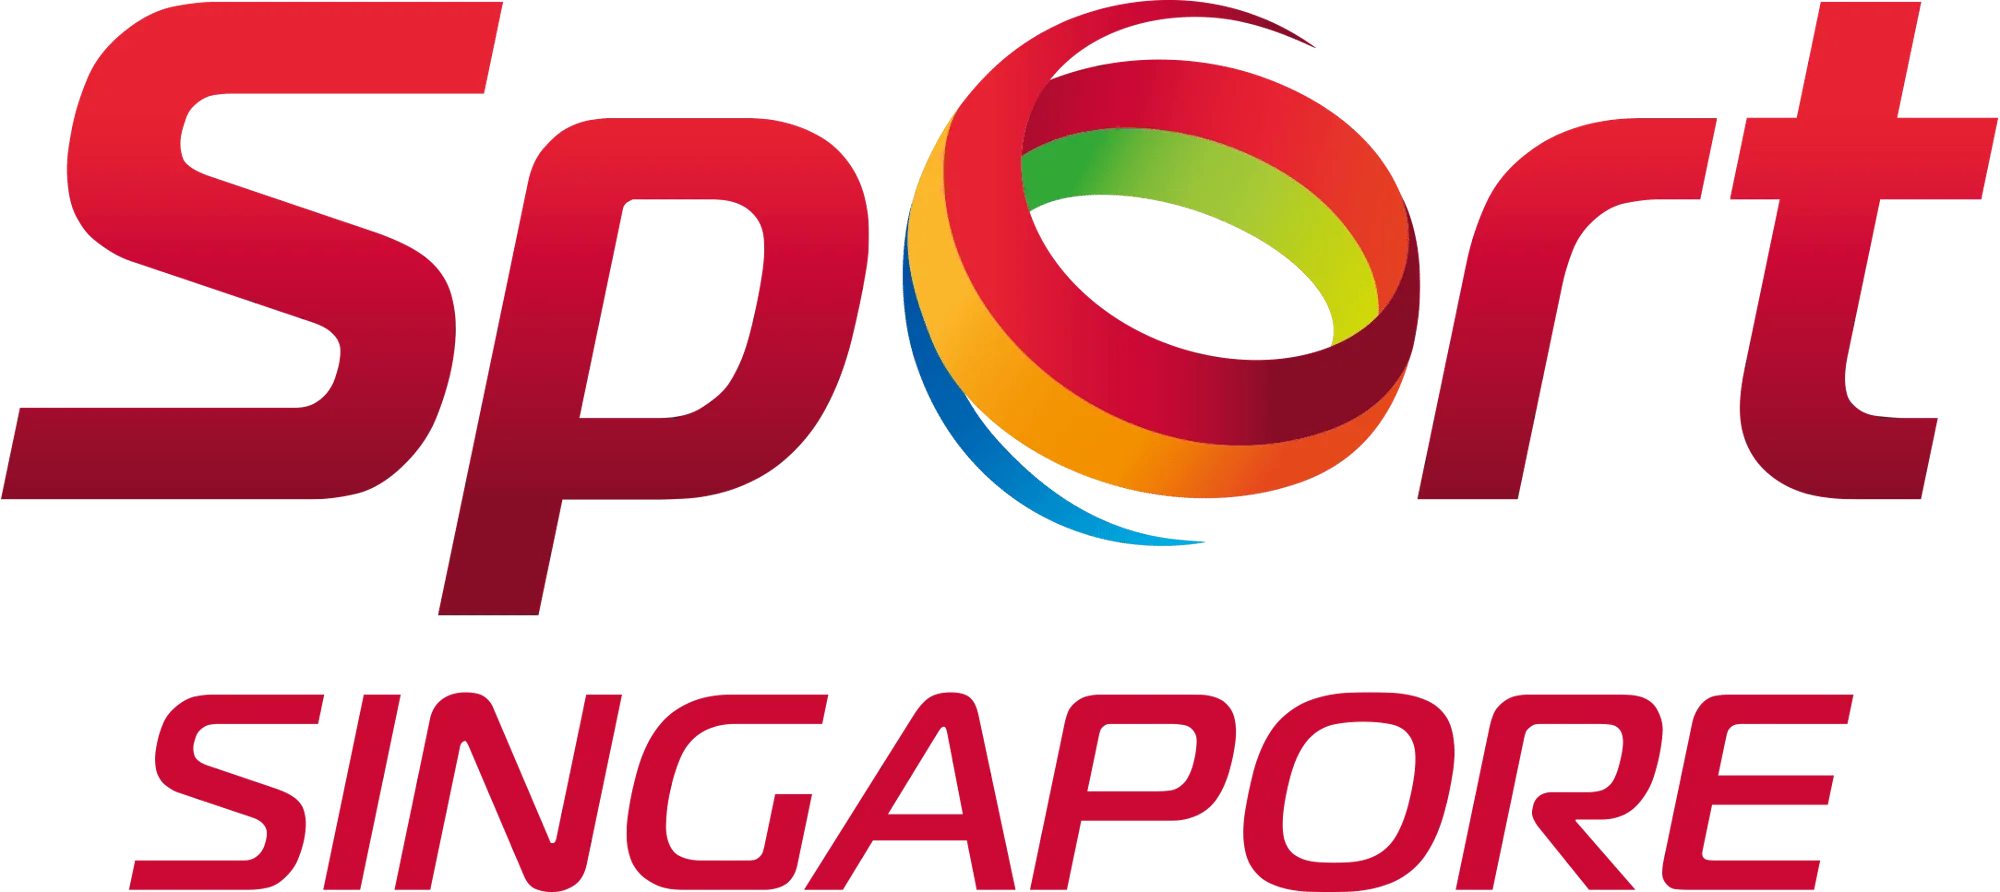 Sportsg logo full colour rgb.png